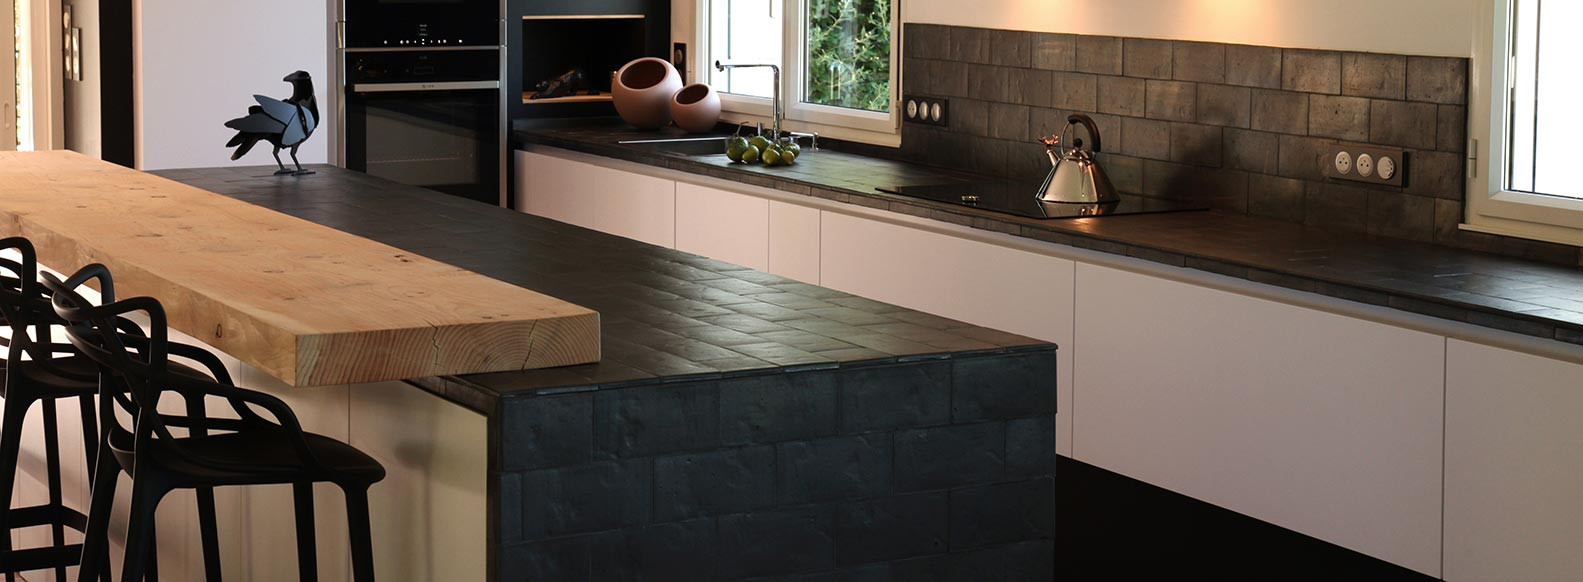 Rectangular ceramic tiles for your kitchen